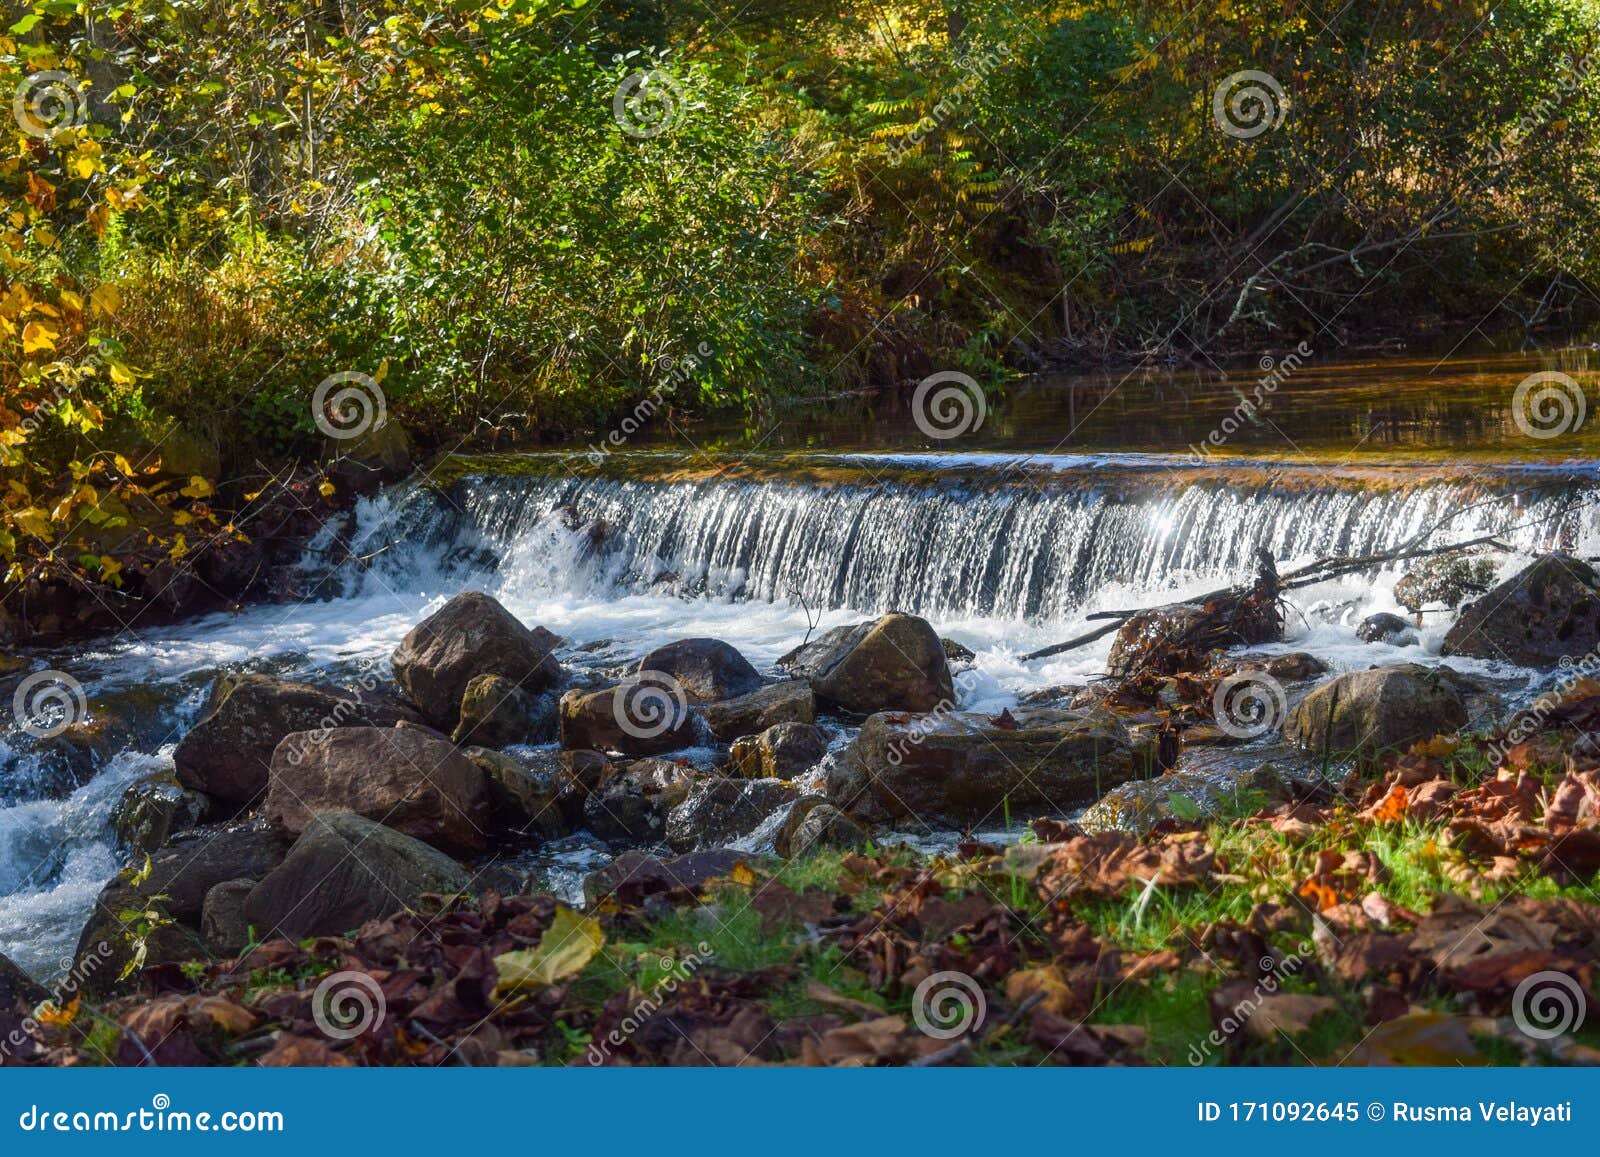 beautiful river at glen alton recreation area in autumn